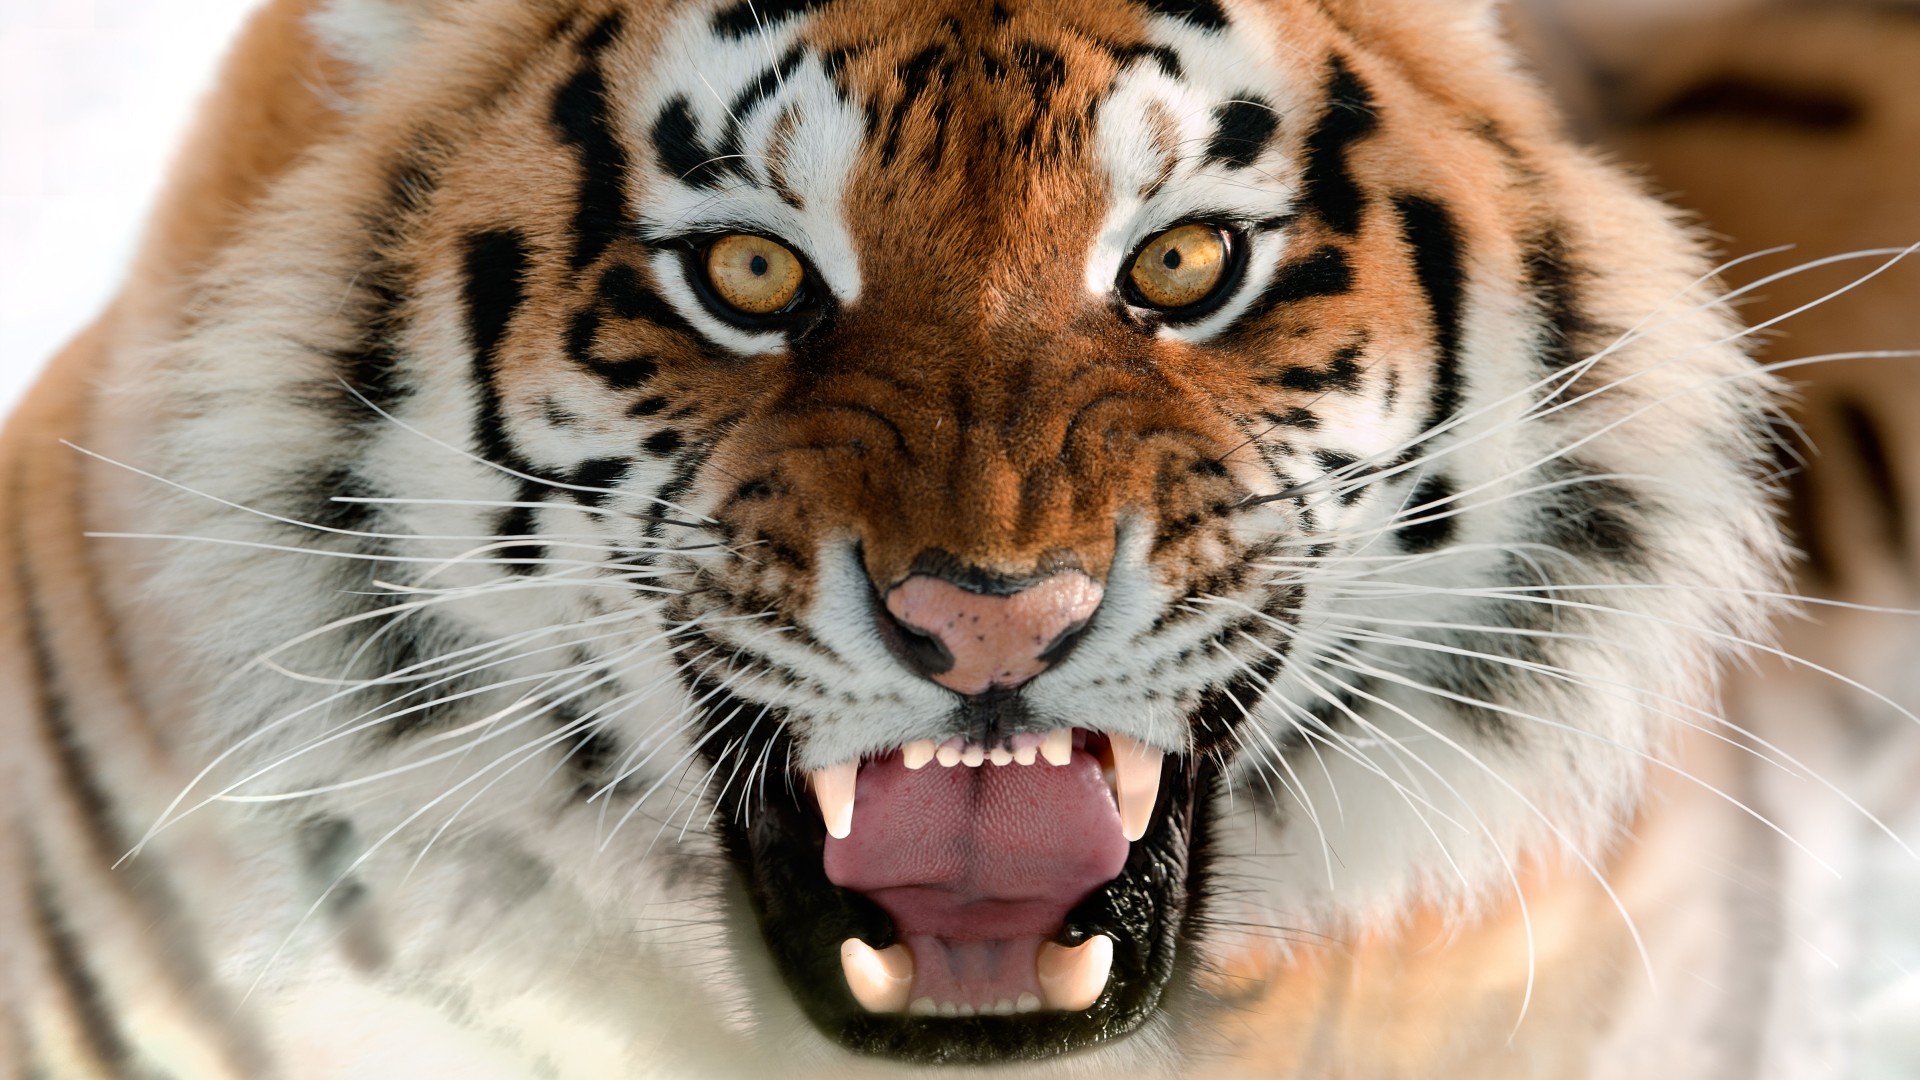 Тигр, морда, оскал, Амурский тигр, портрет, Tiger, Muzzle, Grin, Amur Tiger, portrait (horizontal)